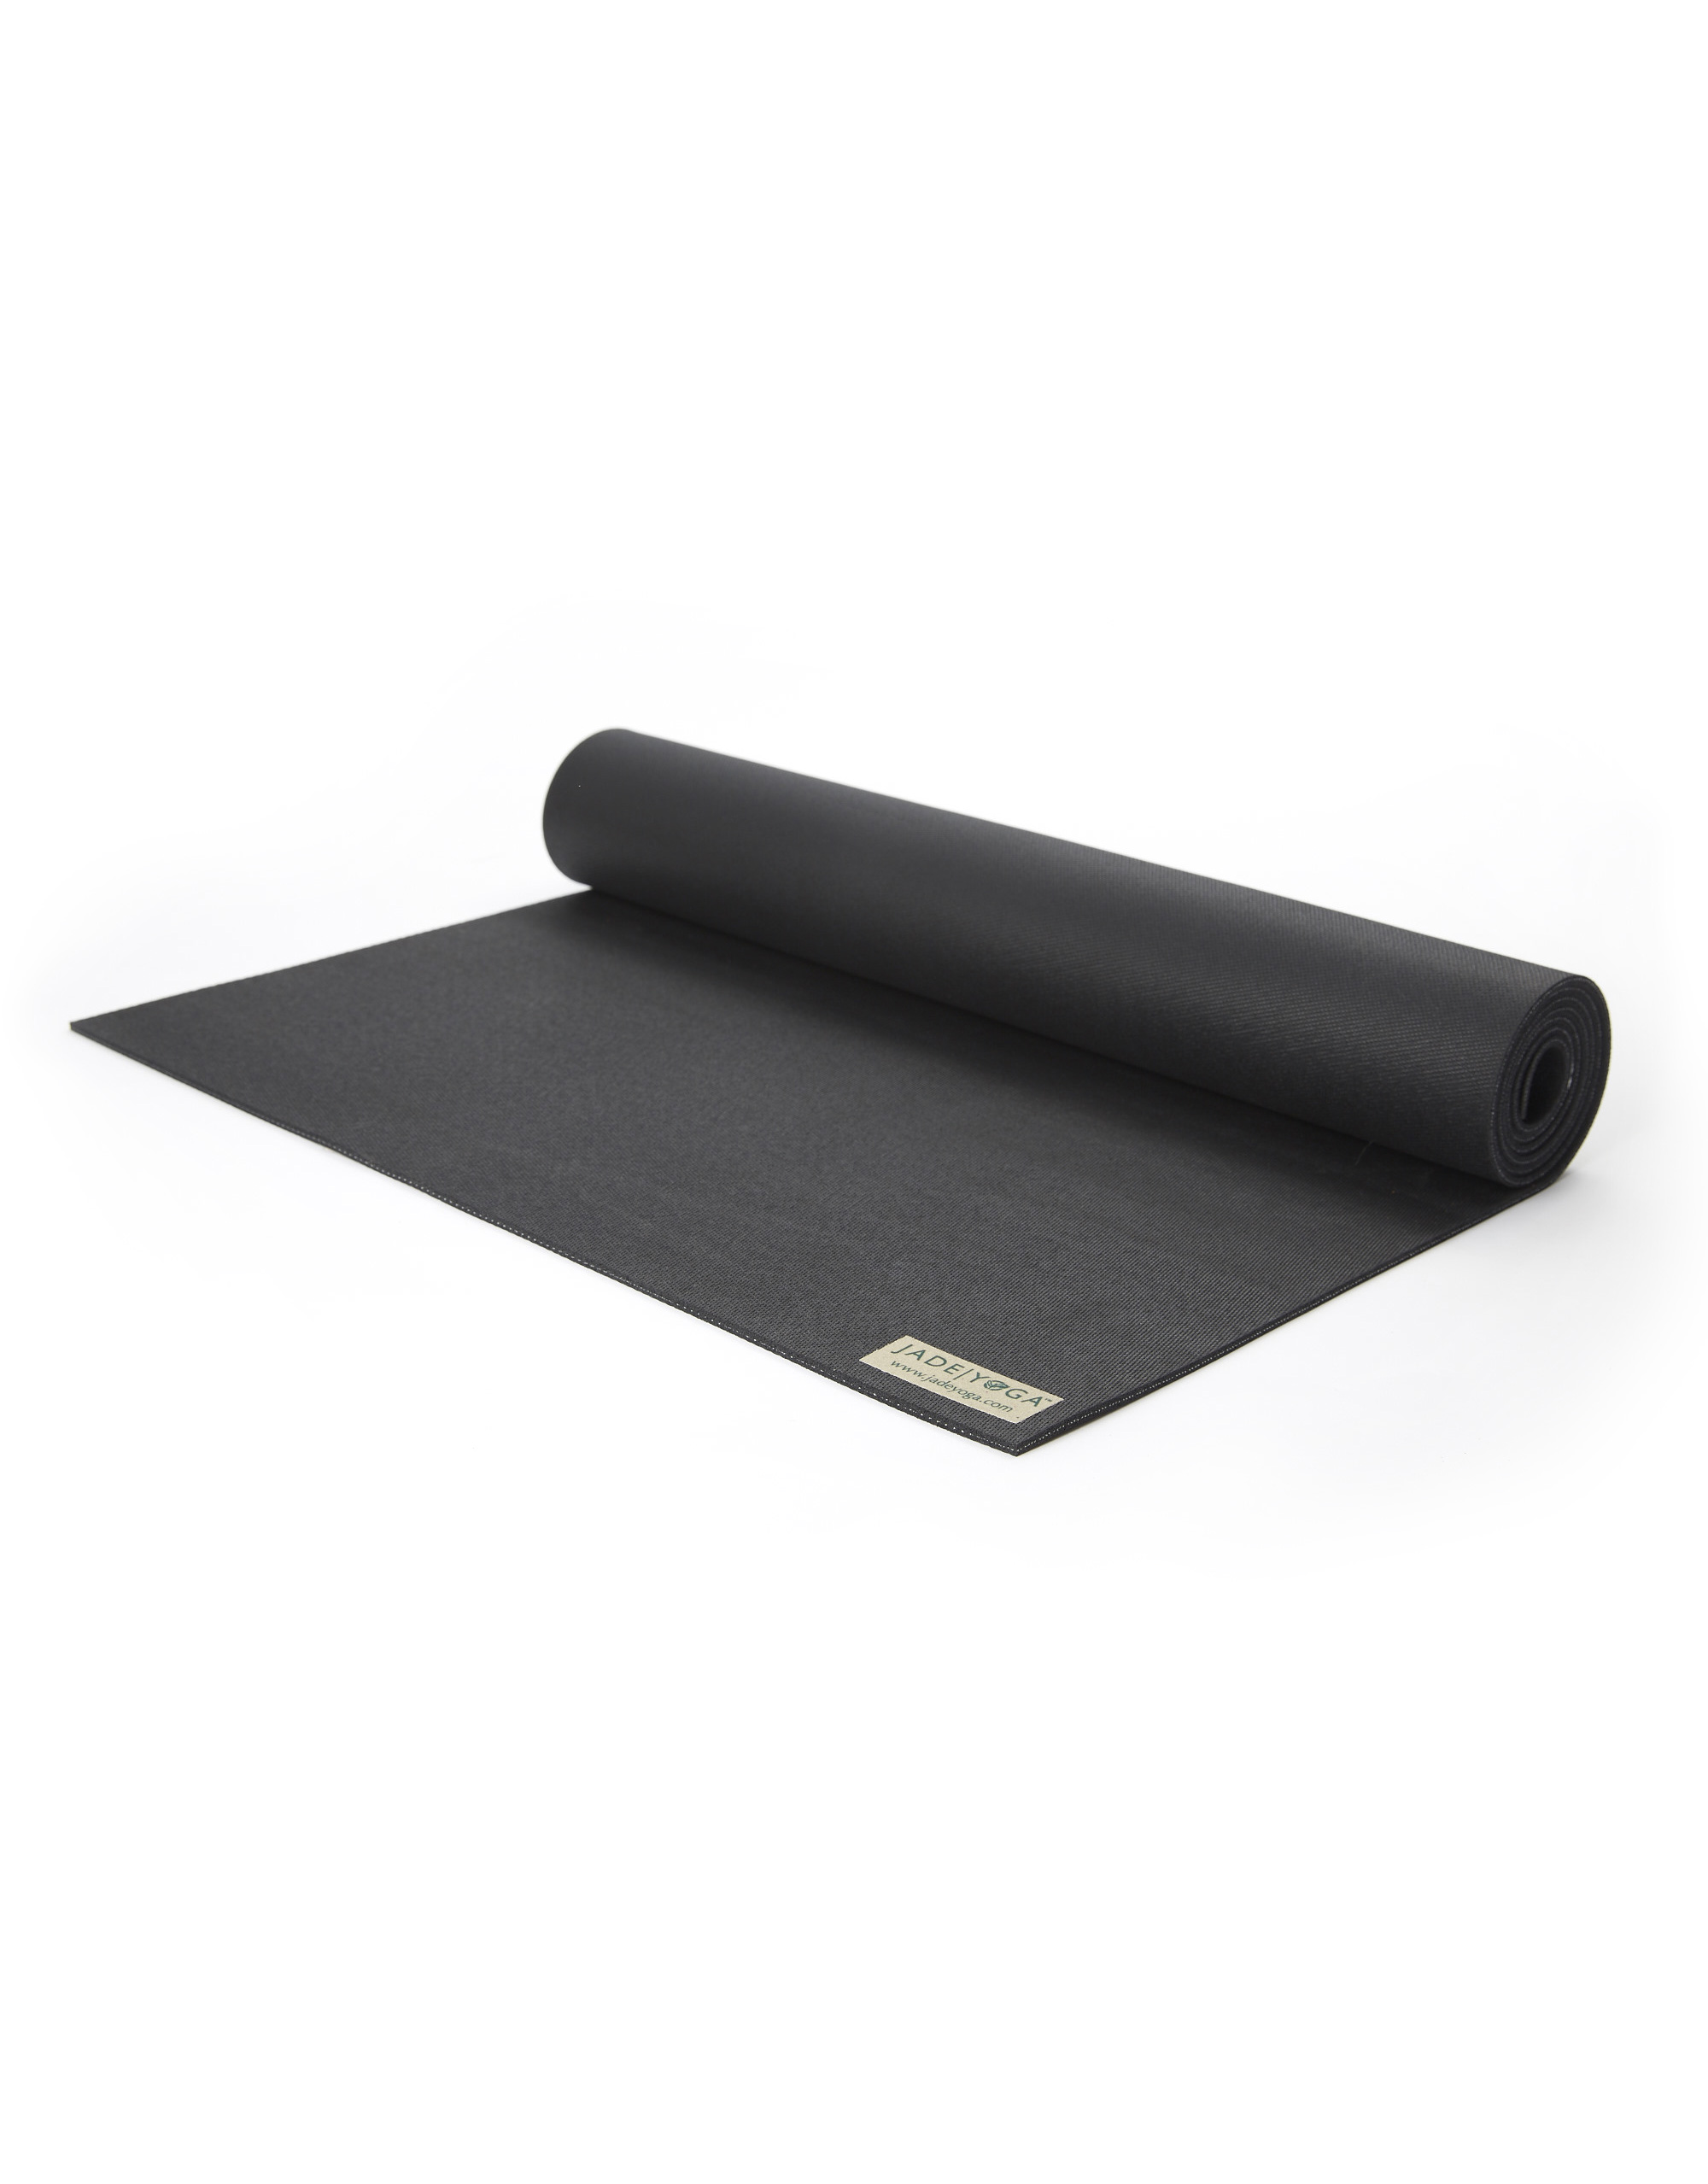  RYSON Foldable Yoga Mat Travel Yoga Mat Packable, 1/4